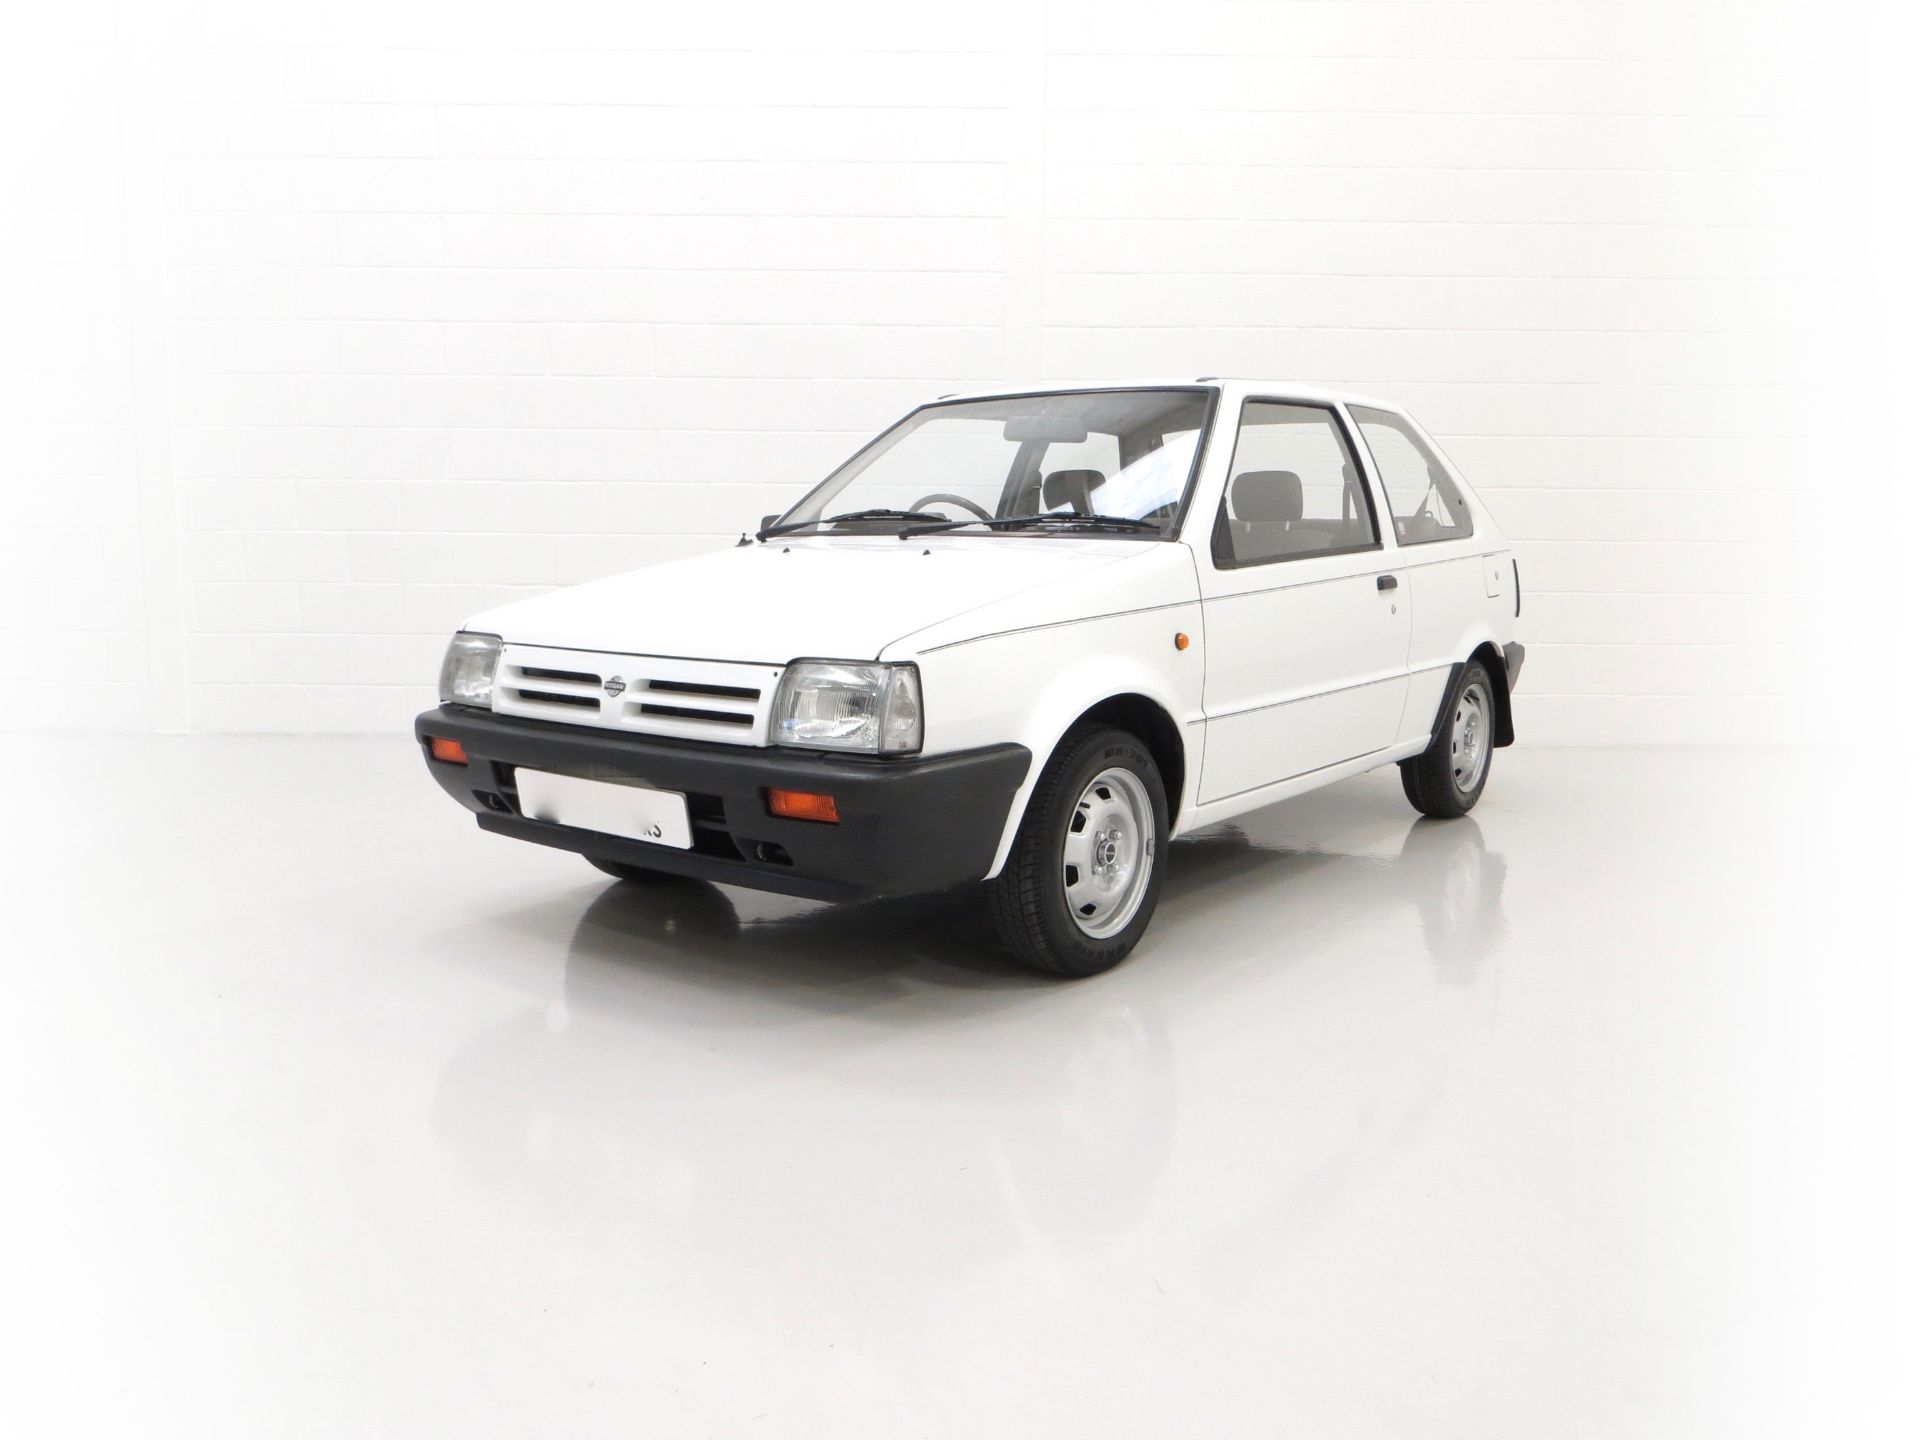 1991, Nissan Micra 1.0 Premium - Image 116 of 118